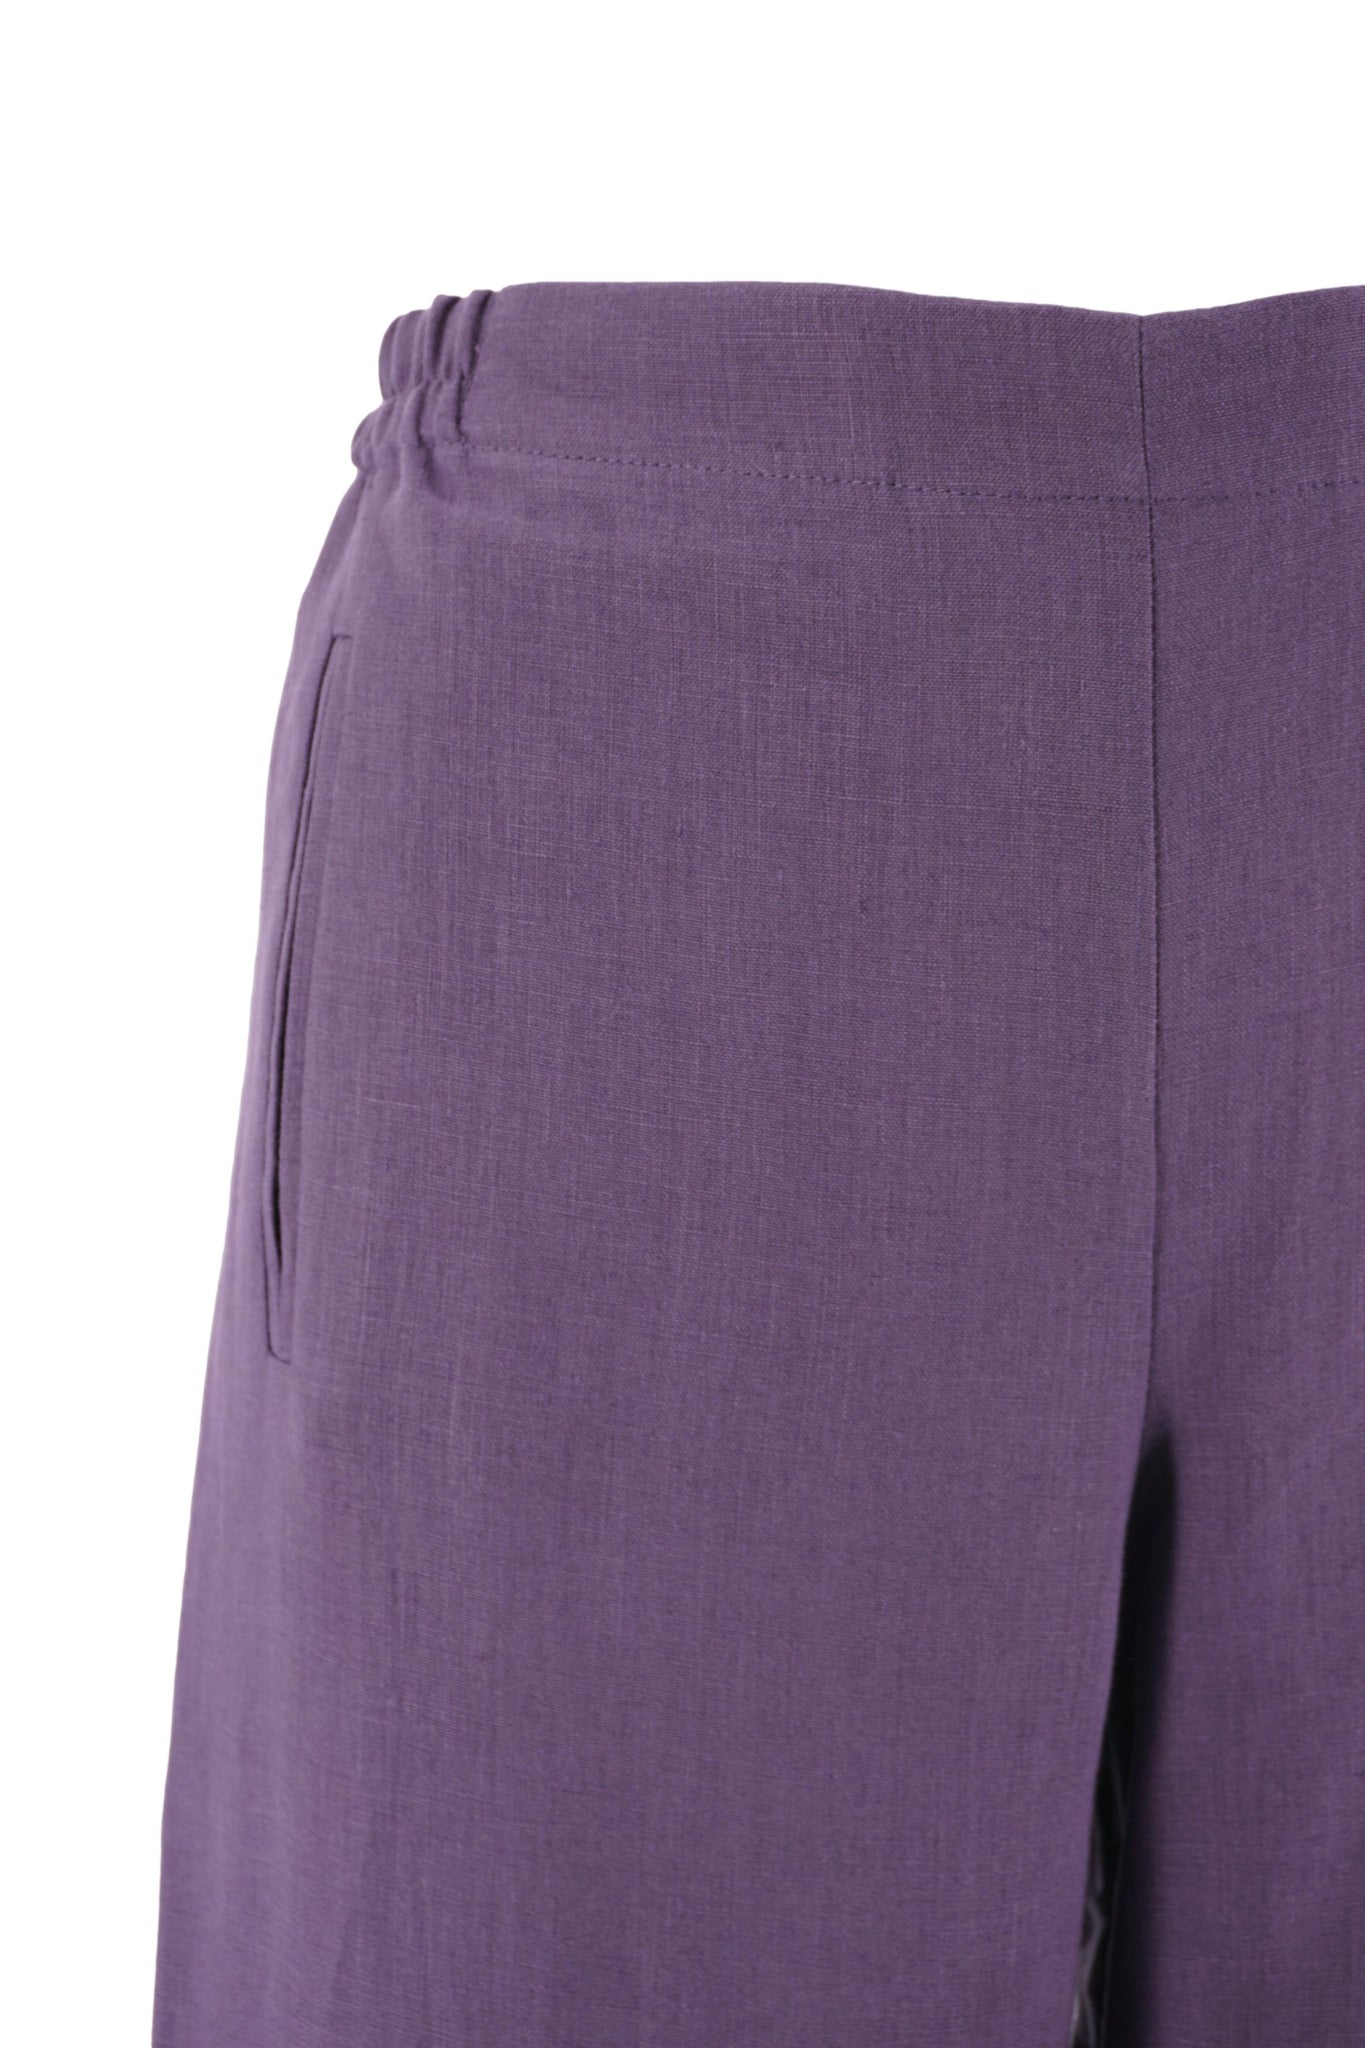 Pantalone in Lino / Viola - Ideal Moda